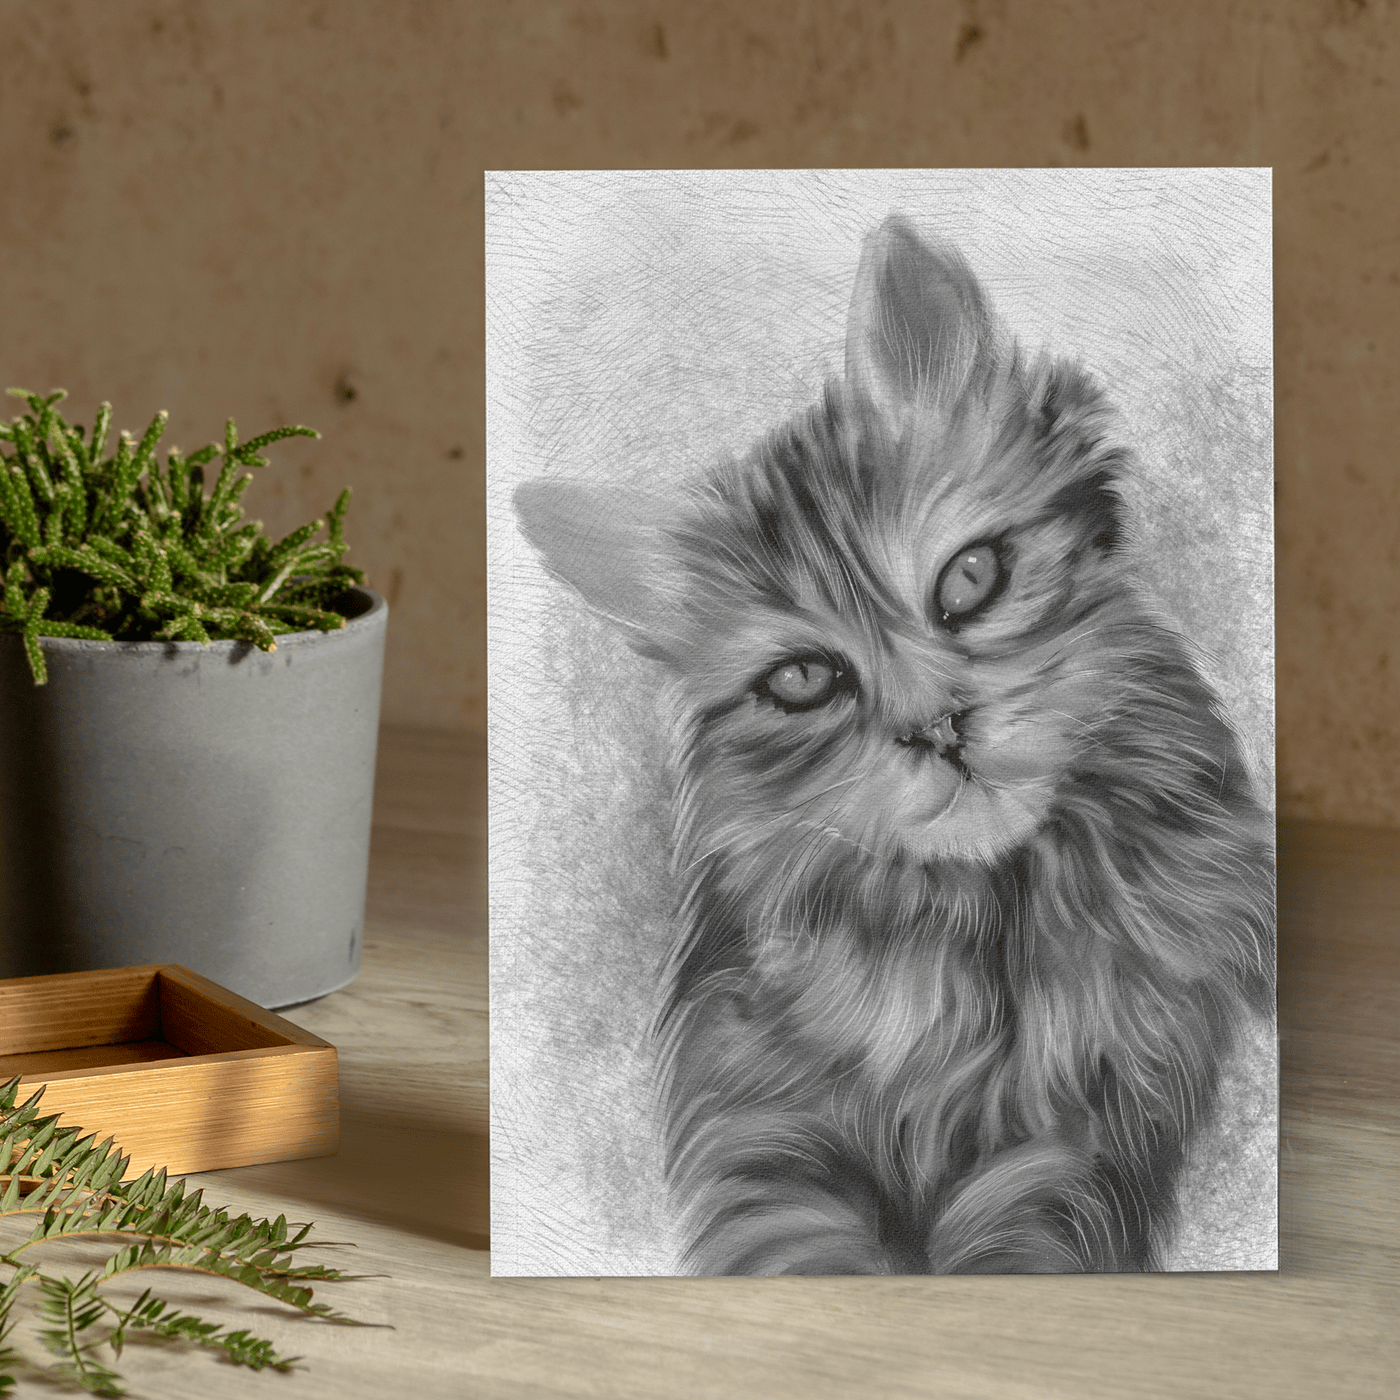 cat pencil sketch of an adorable cat